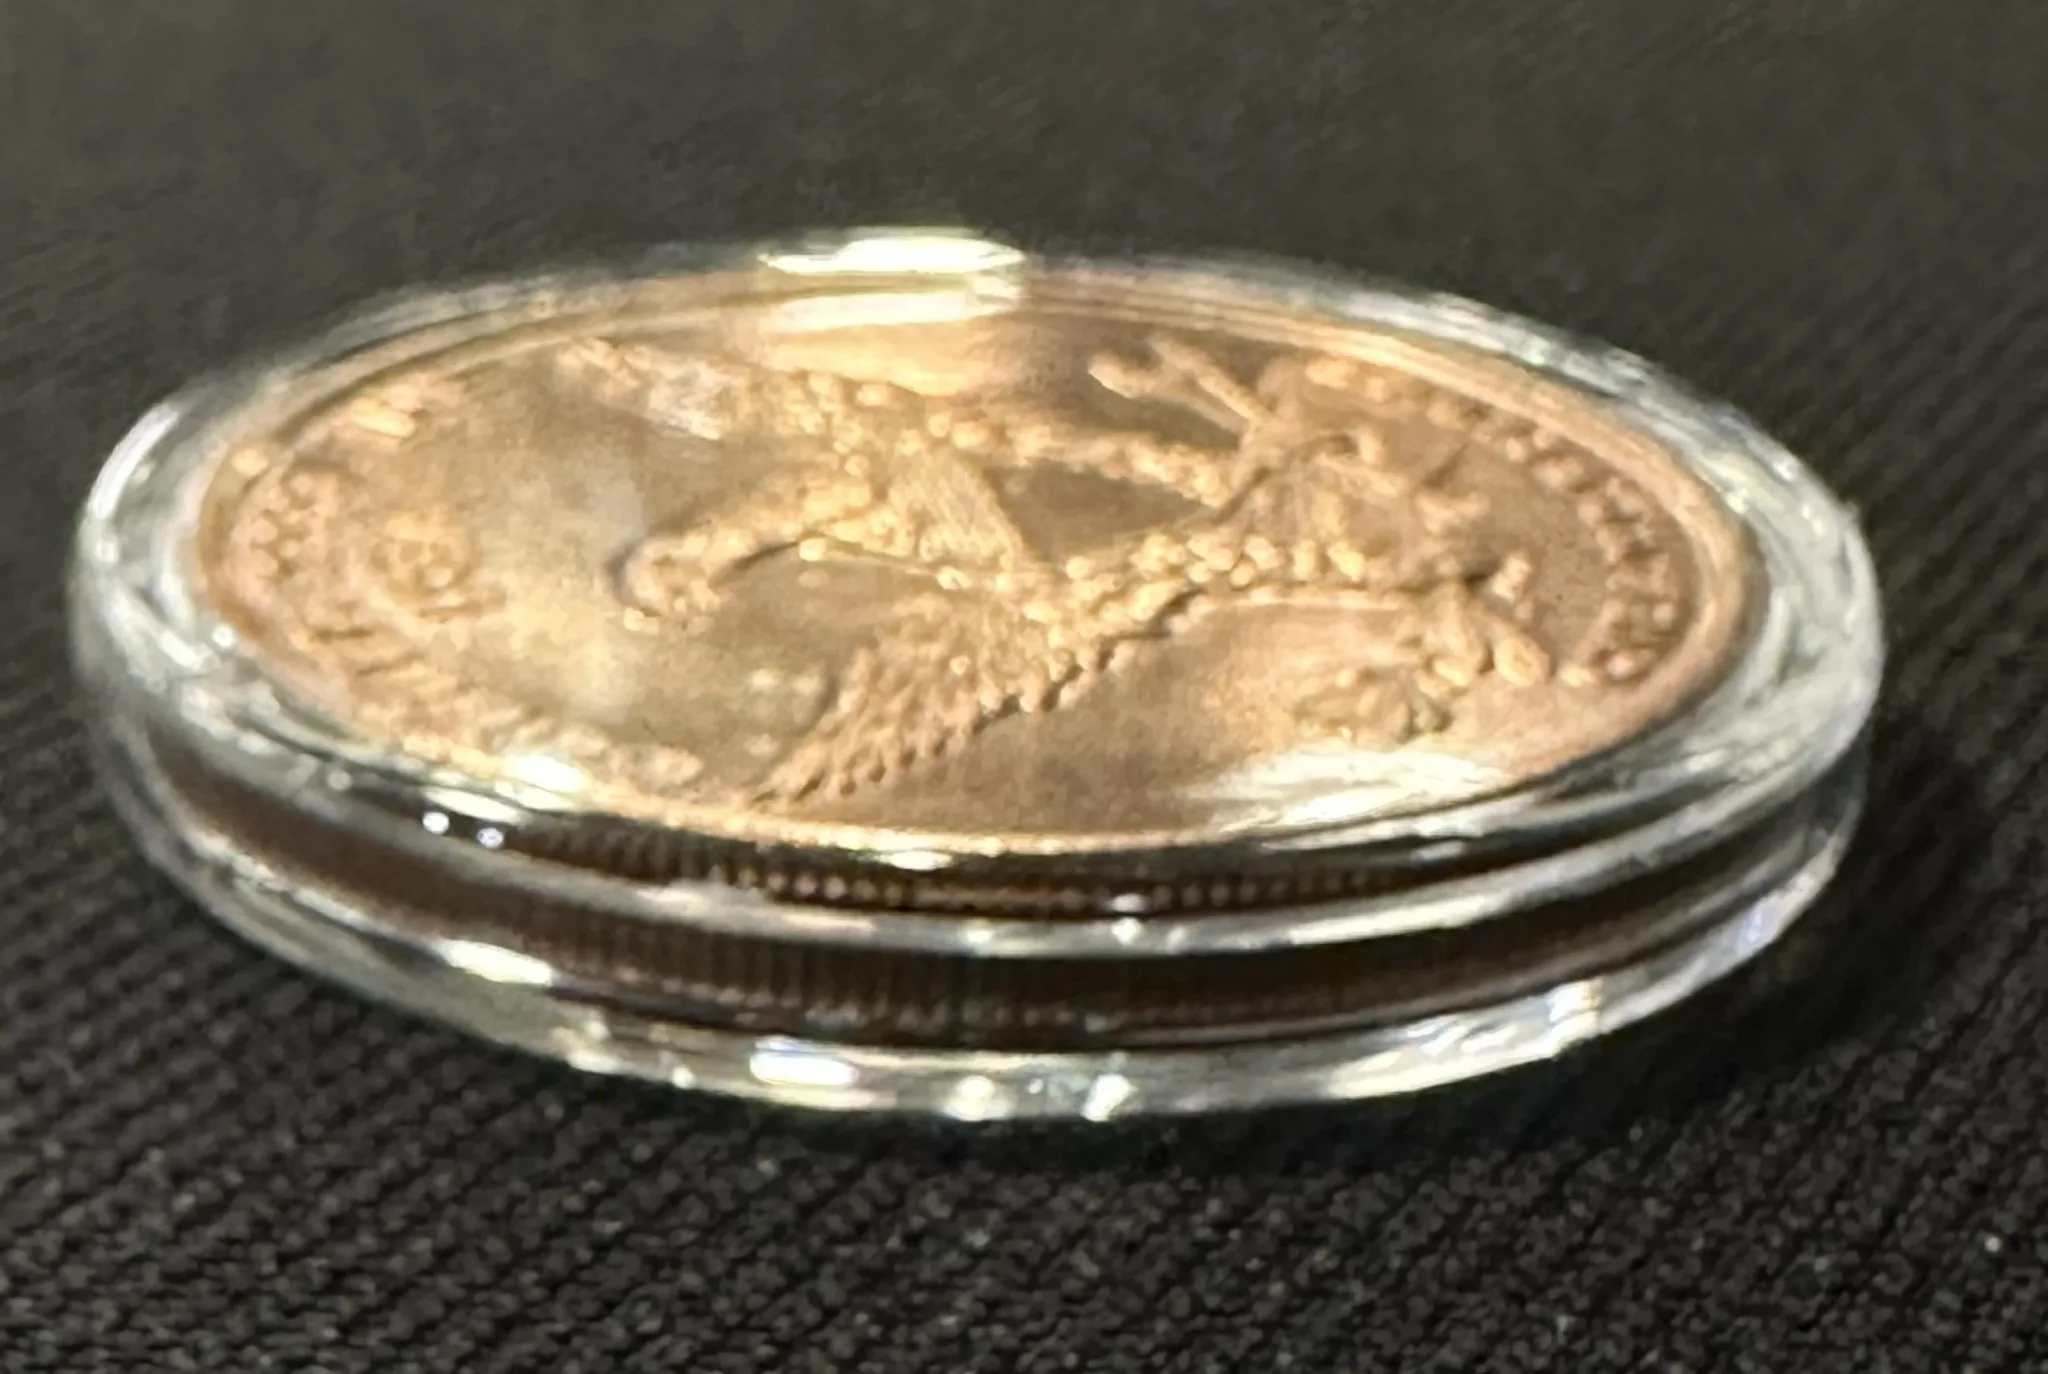 Parasaurolophus copper coin, 1oz Prehistoric Online